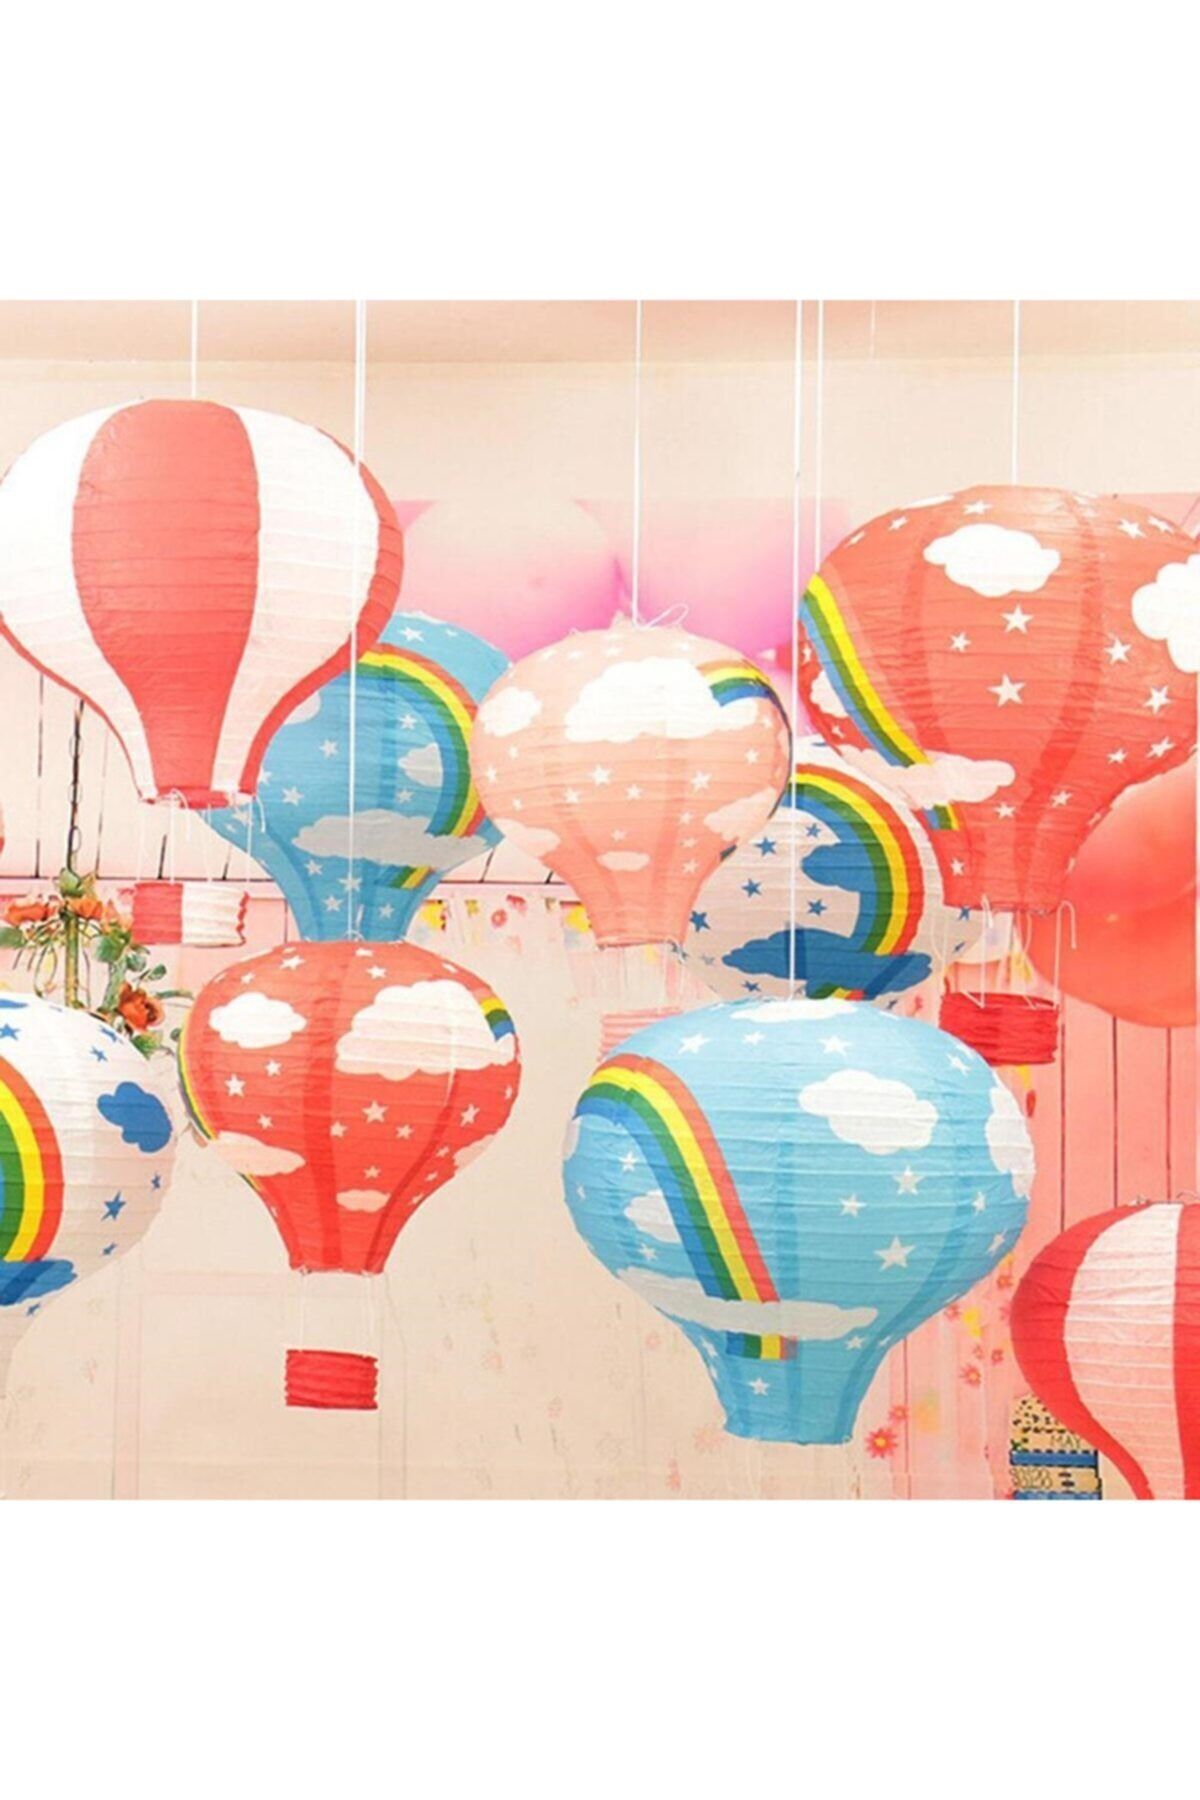 DecoTown Dekoratif Renkli Kağıt Dilek Feneri Balonu Renkli Uçan Balon